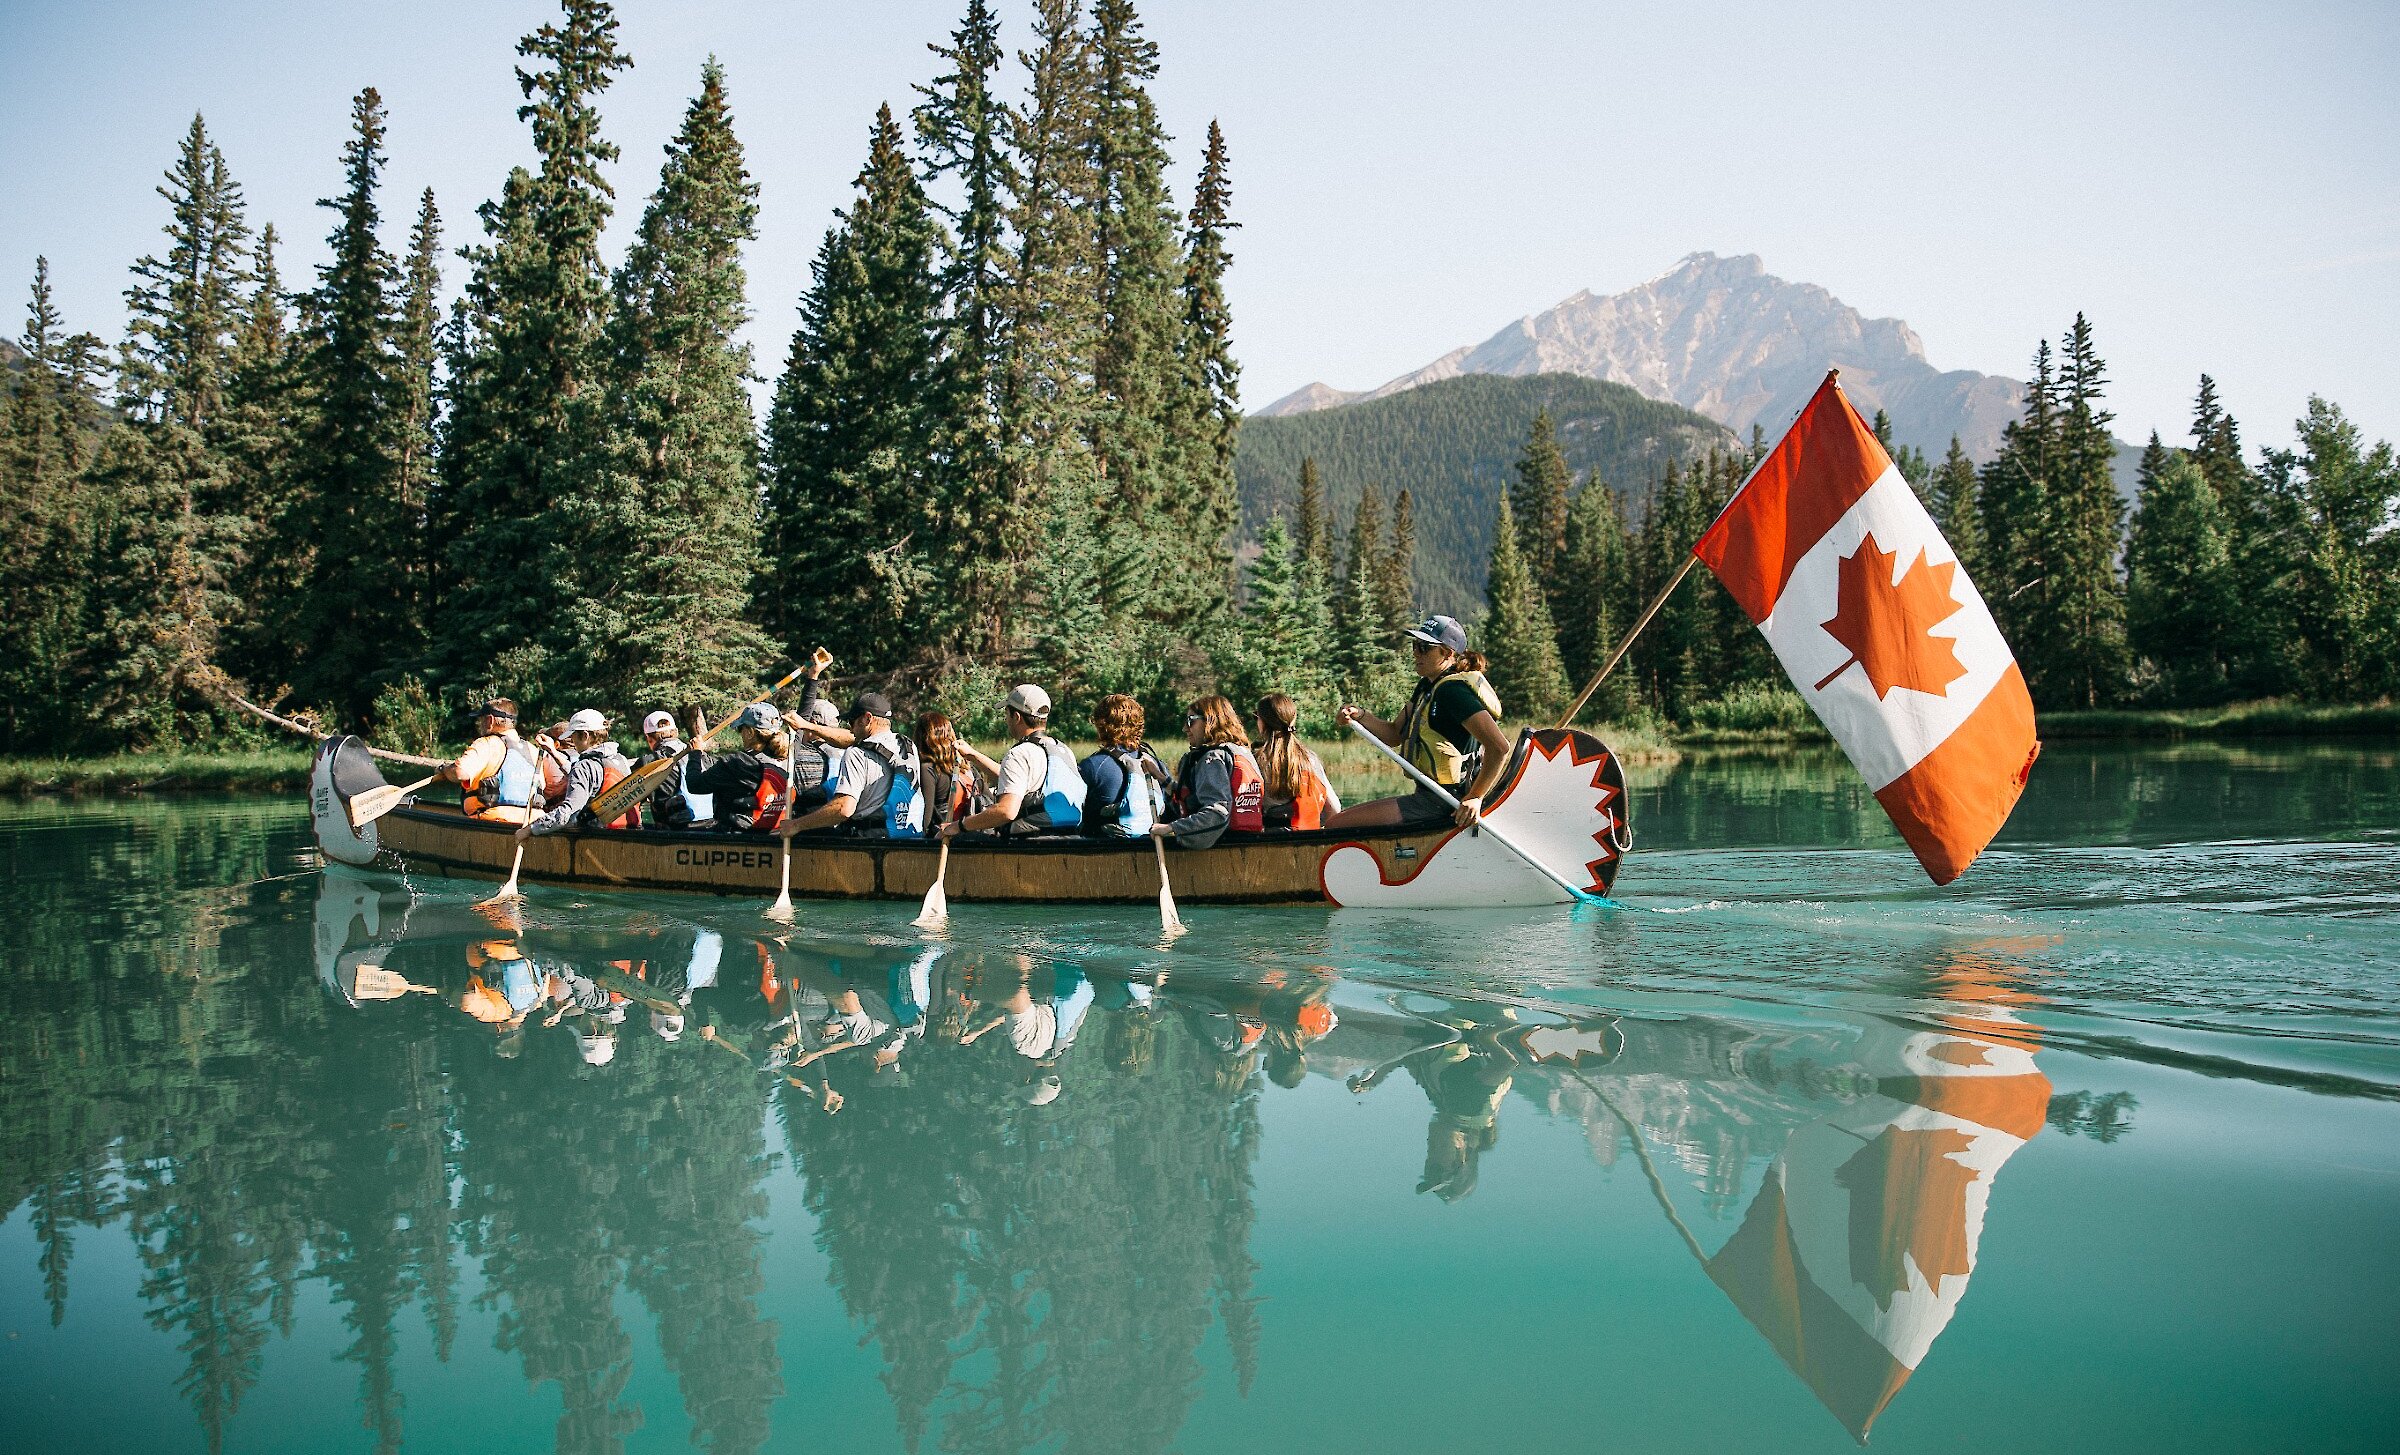 Big Canoe Tour - River Explorer in Banff